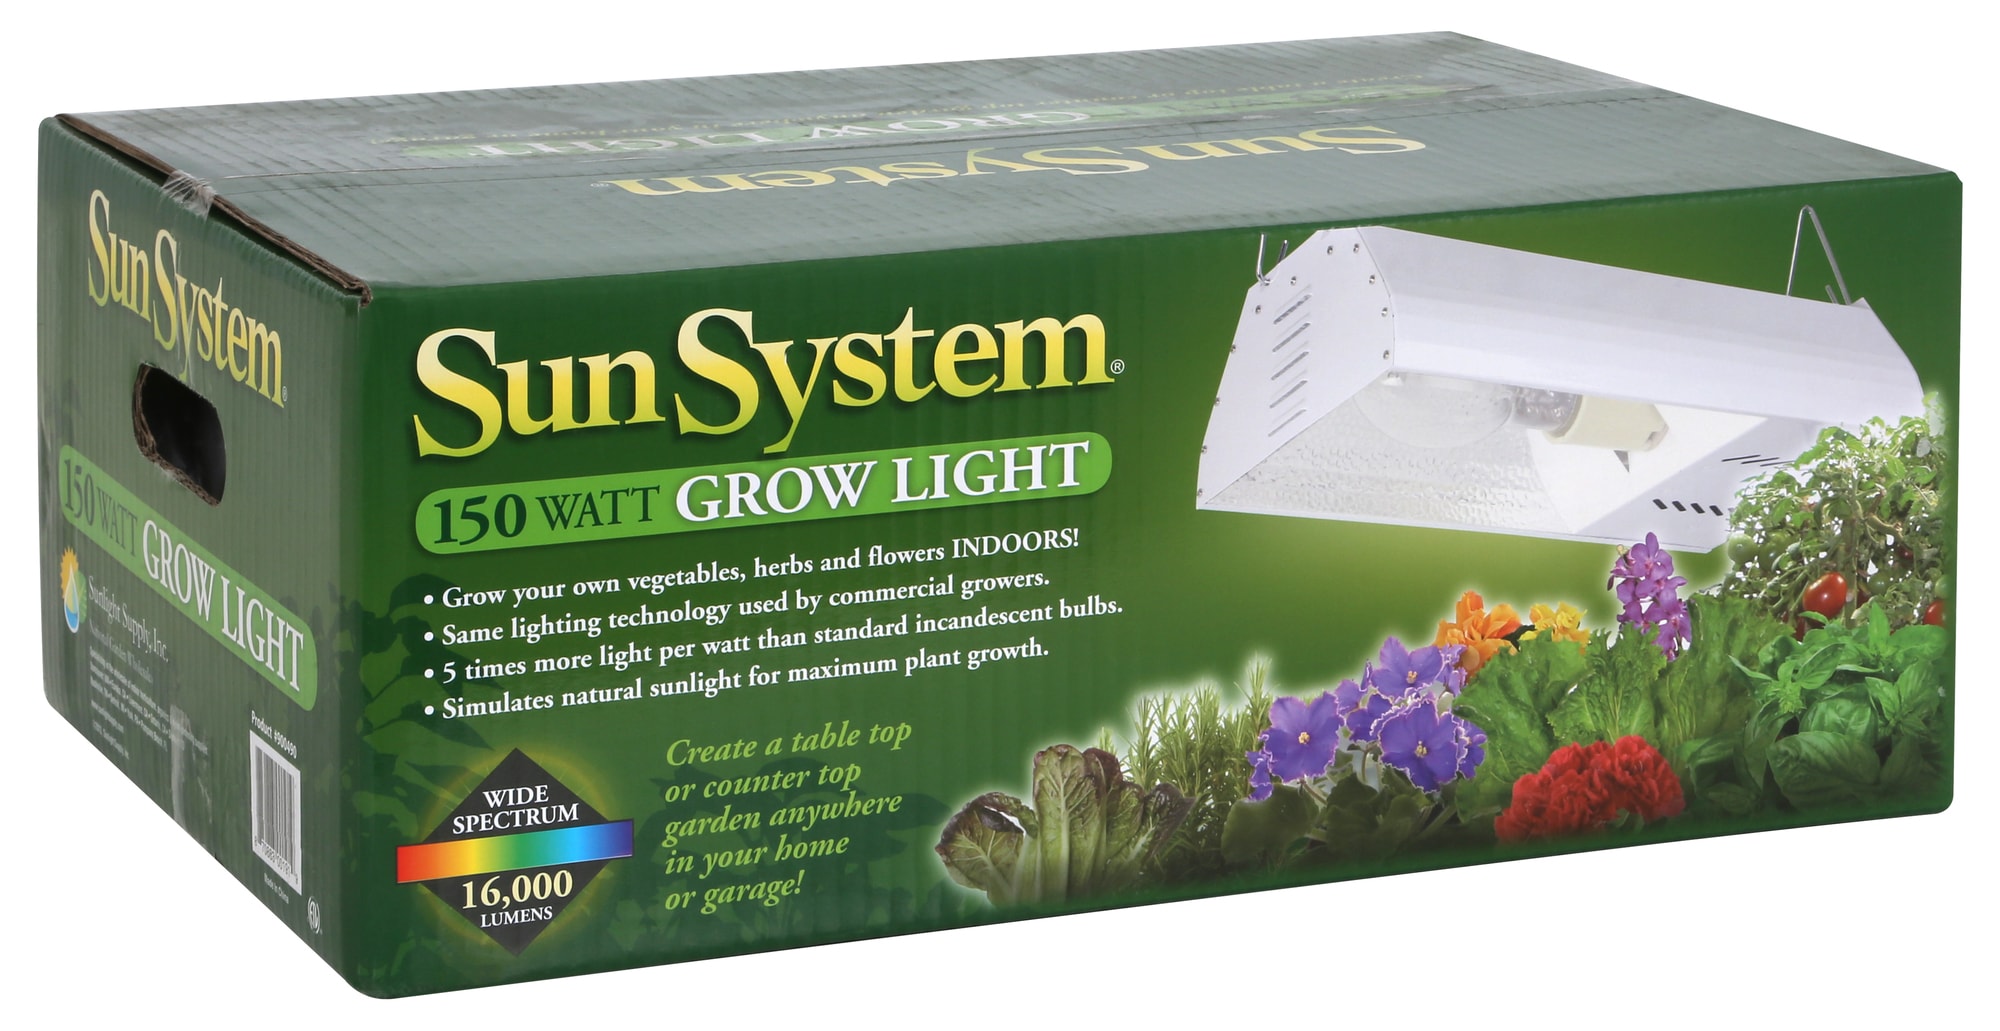 Sun System Hps 150 Grow Light